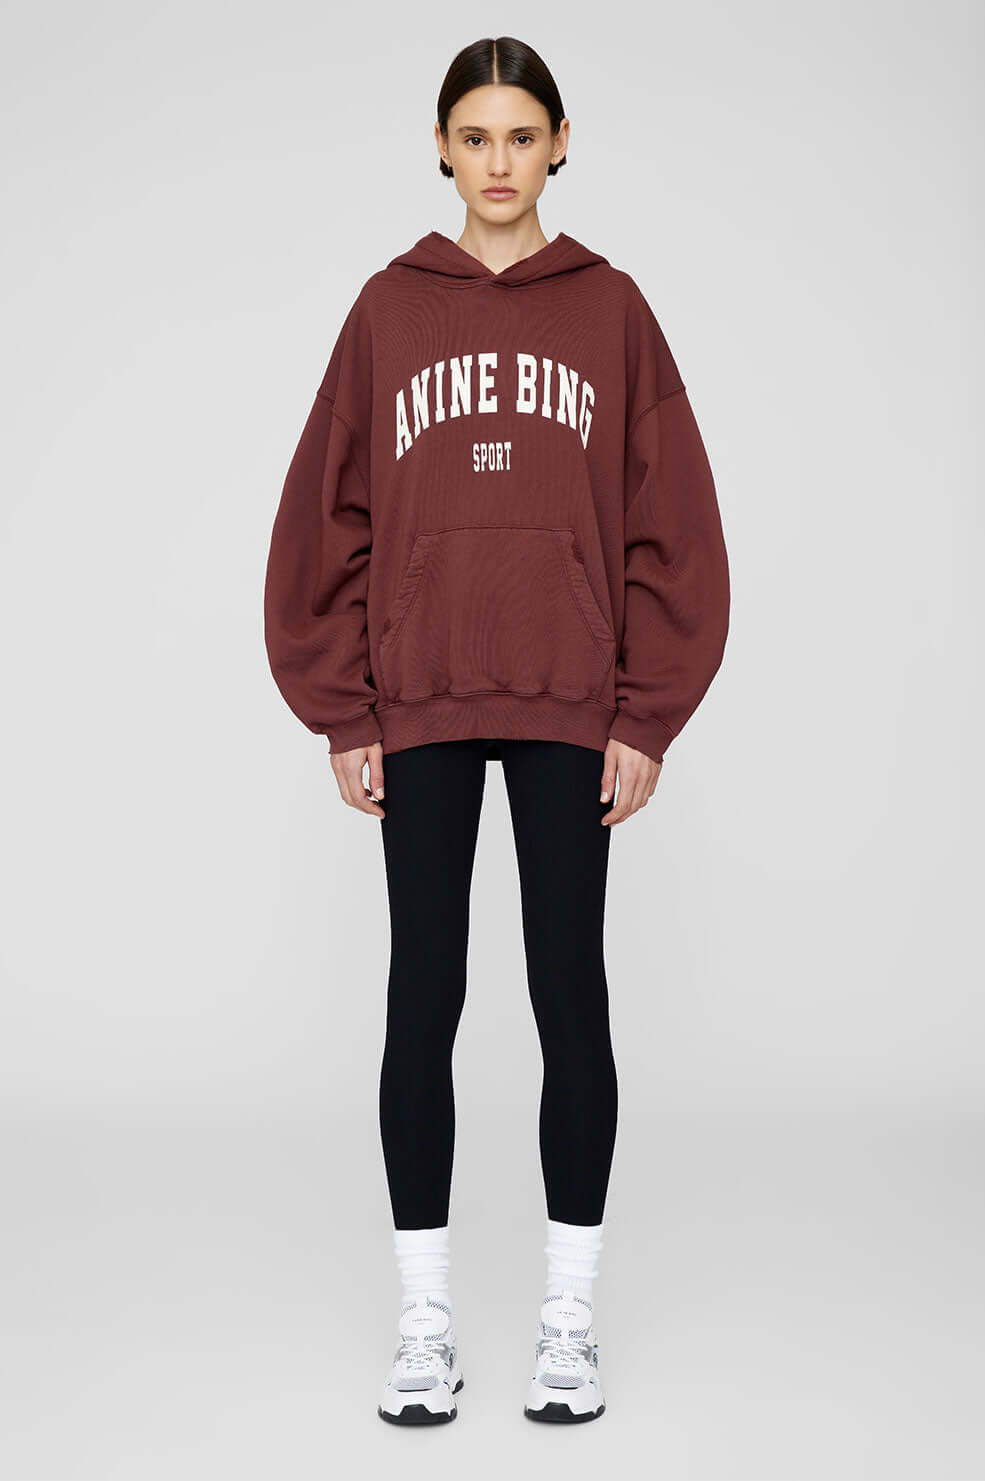 Anine Bing Harvey Sweatshirt in Dark Cherry available at TNT The New Trend Australia